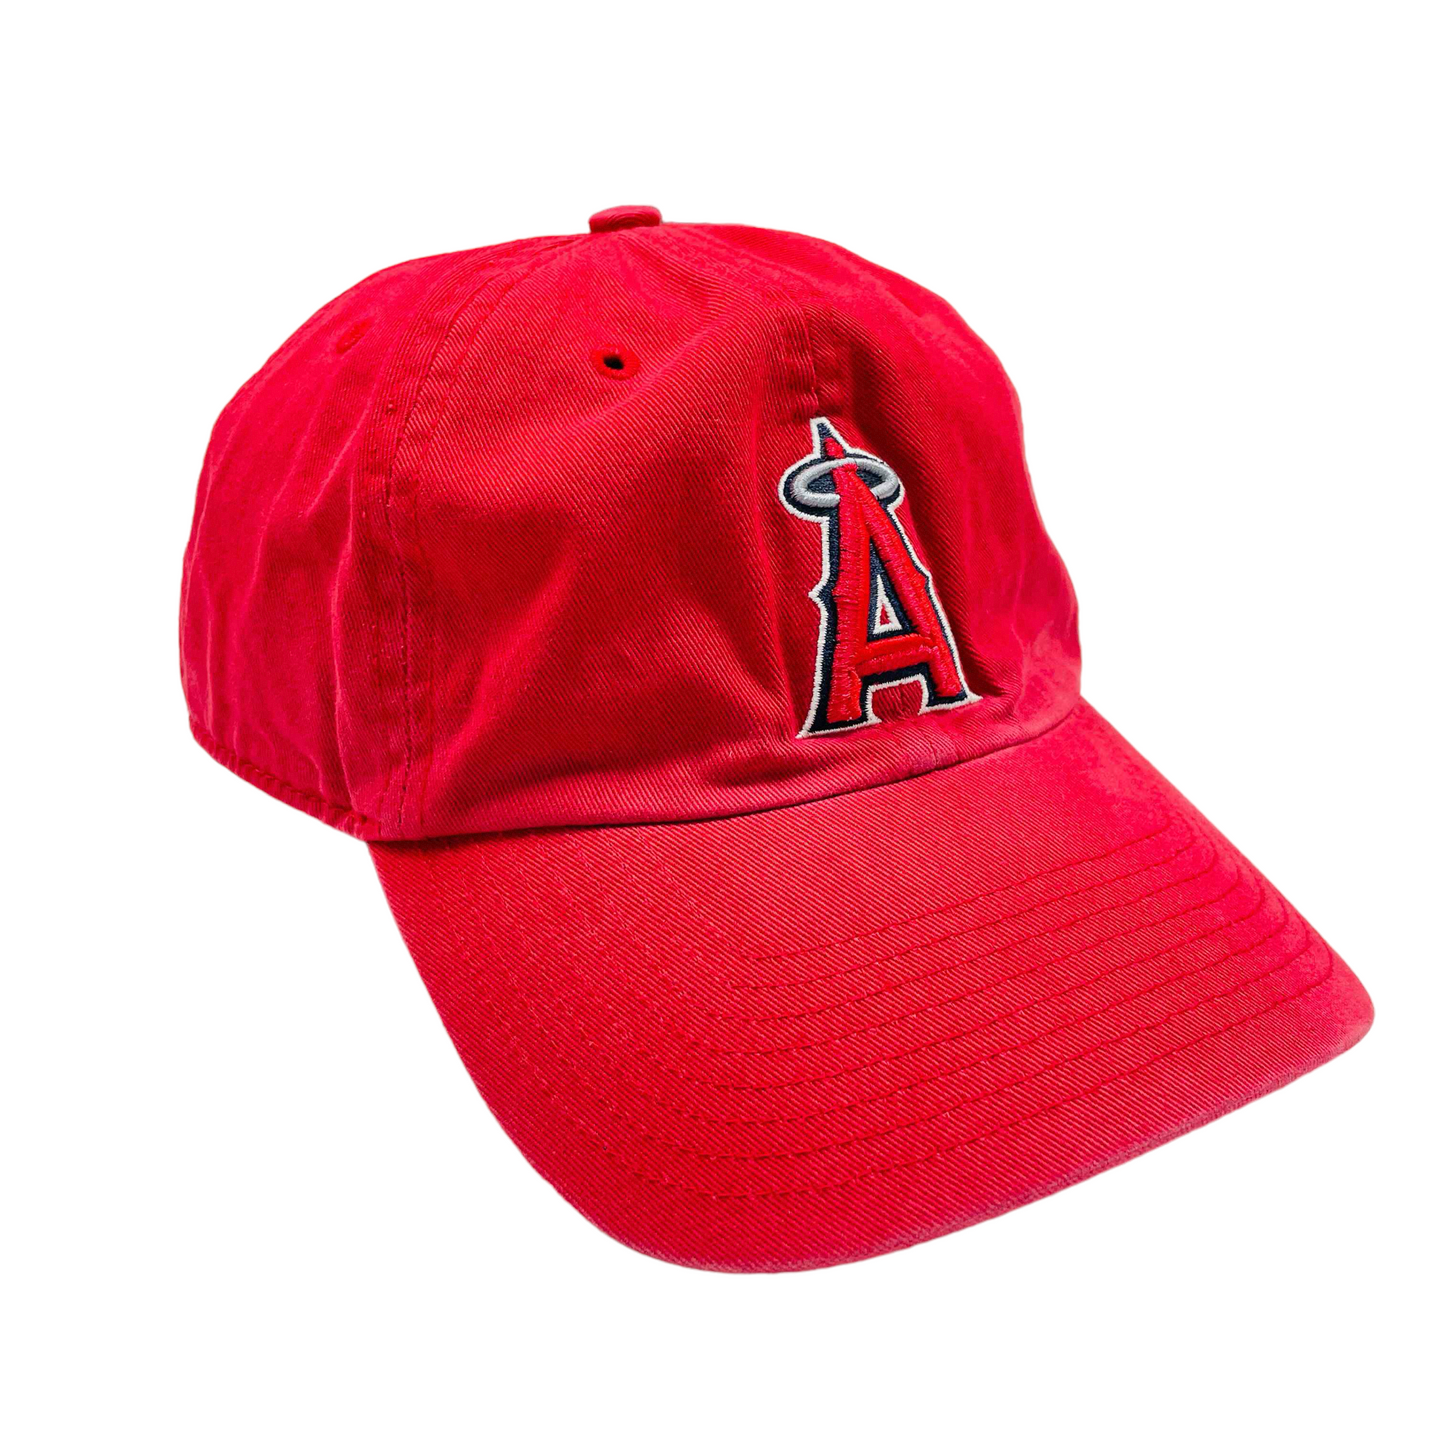 Los Angeles Angels Caps